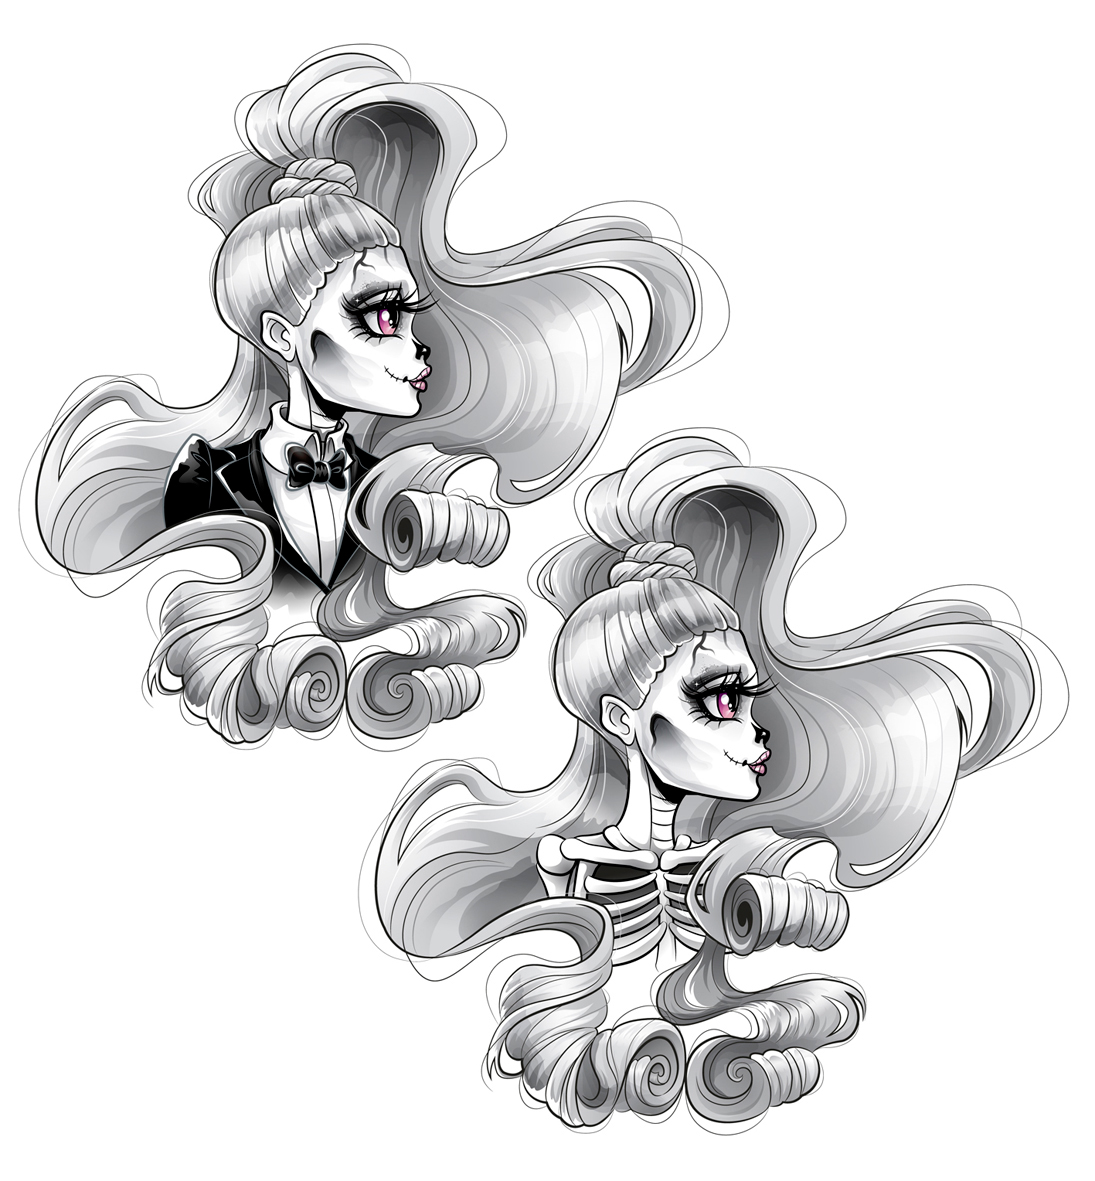 zomby gaga Lady Gaga monster high mattel dolls born this way little monster monster